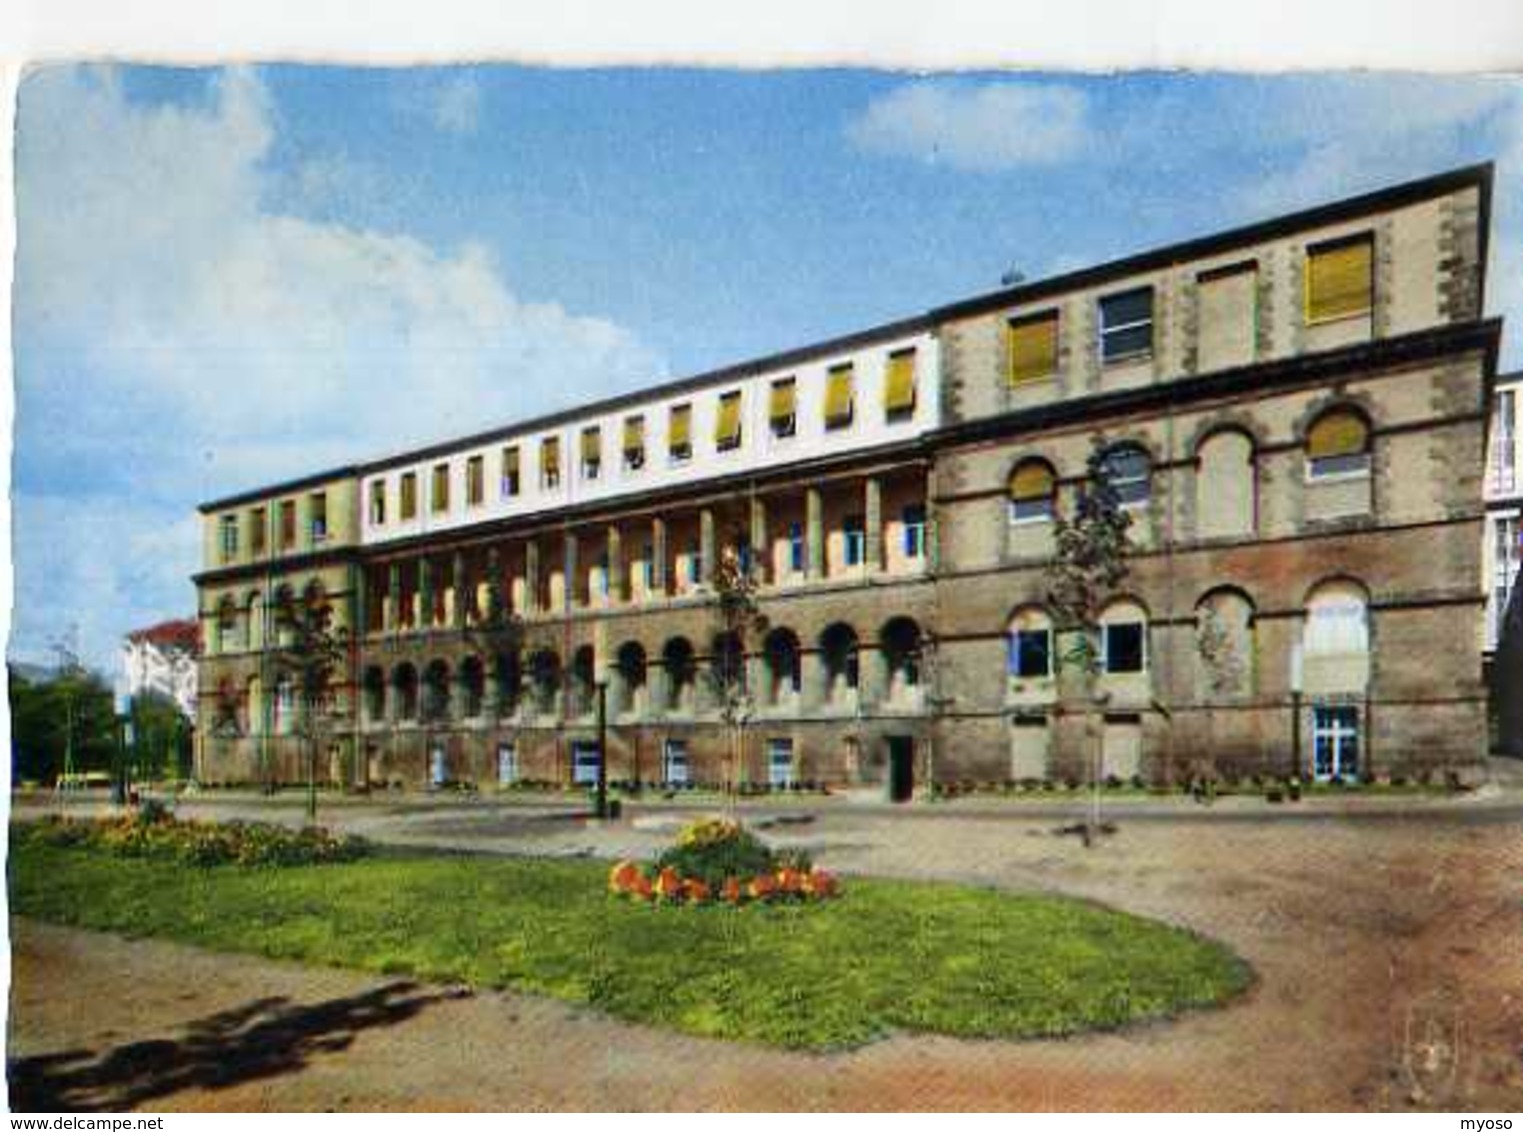 63 CLERMONT FERRAND Hotel Dieu Facade Sud Services St VincentnLeriche Traumatologie Tansfusion Sterilisation - Clermont Ferrand